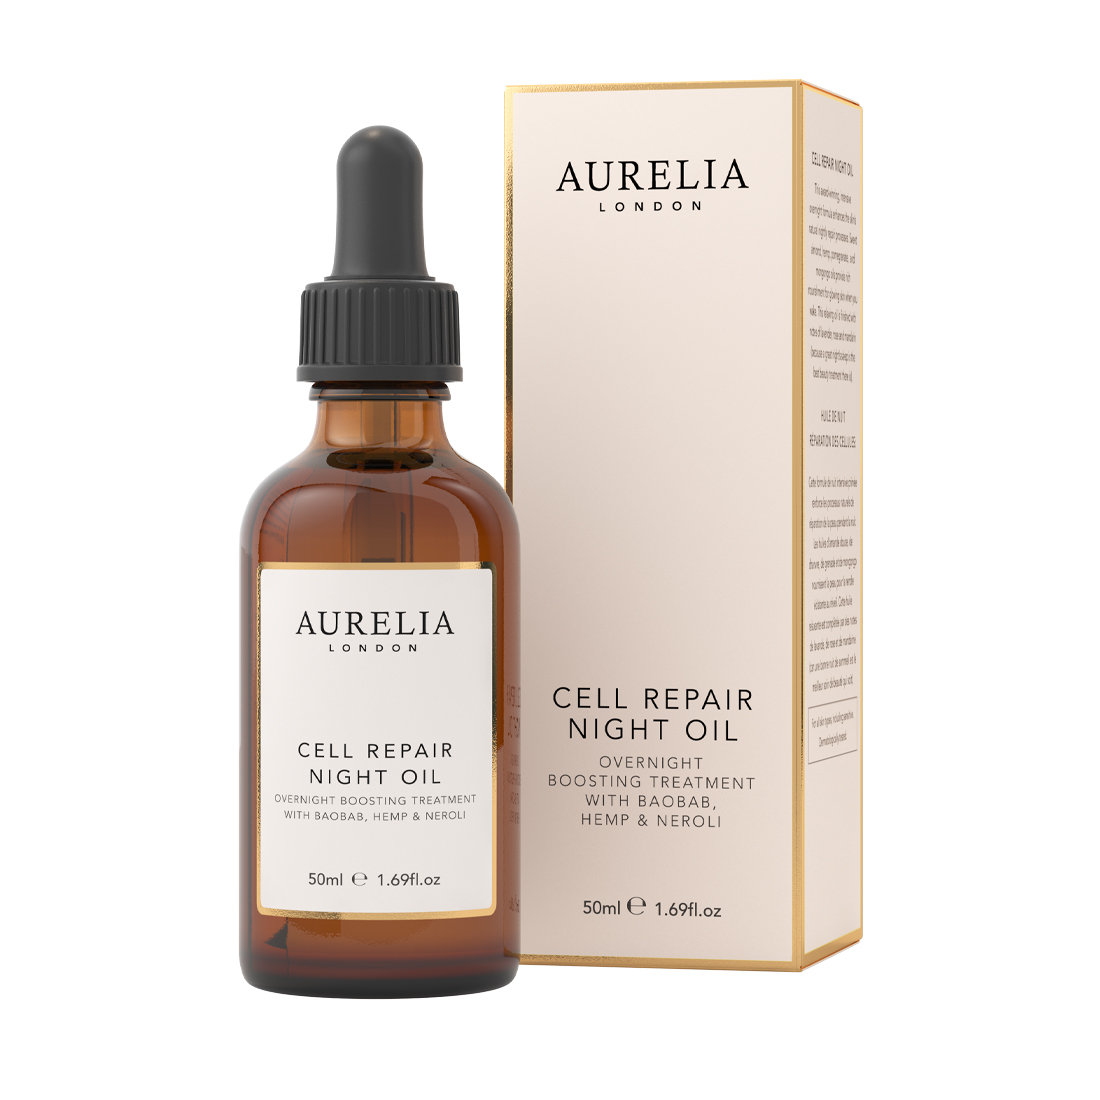 An image of Aurelia London, Cell Repair Night Oil, 50ml